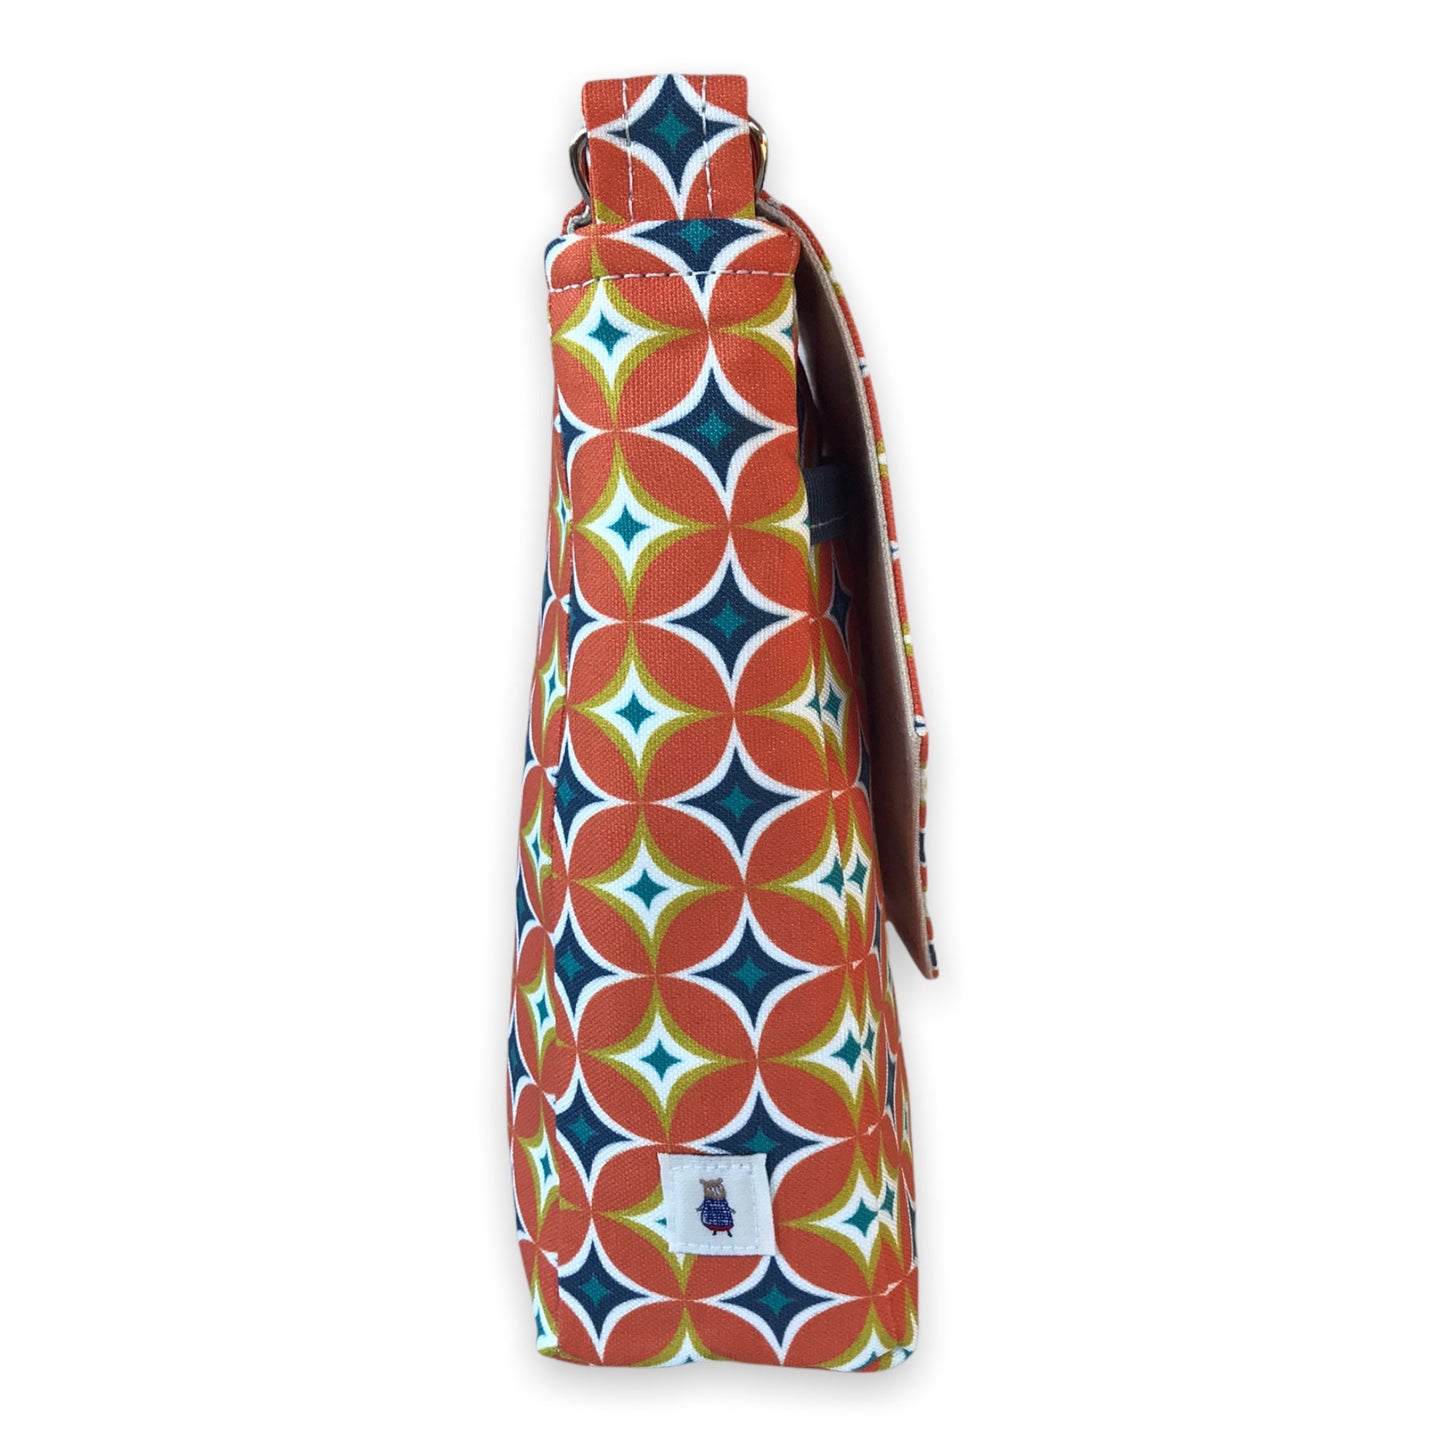 Mid-century modern geometric print crossbody bag, mini messenger style, orange, navy, & yellow, 8.5"x6".